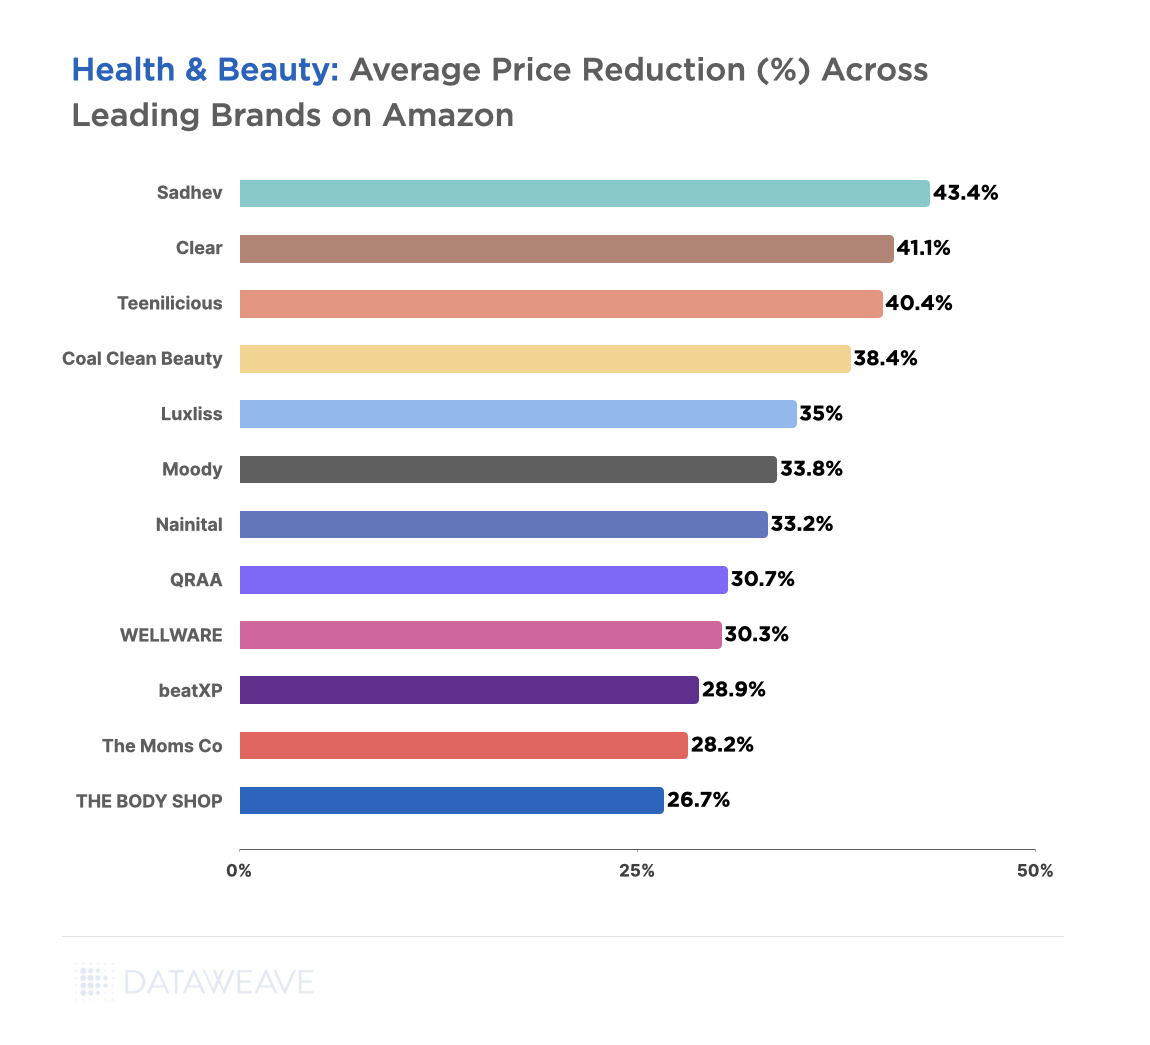 Health & beauty average price reduction across leading brands on Amazon.